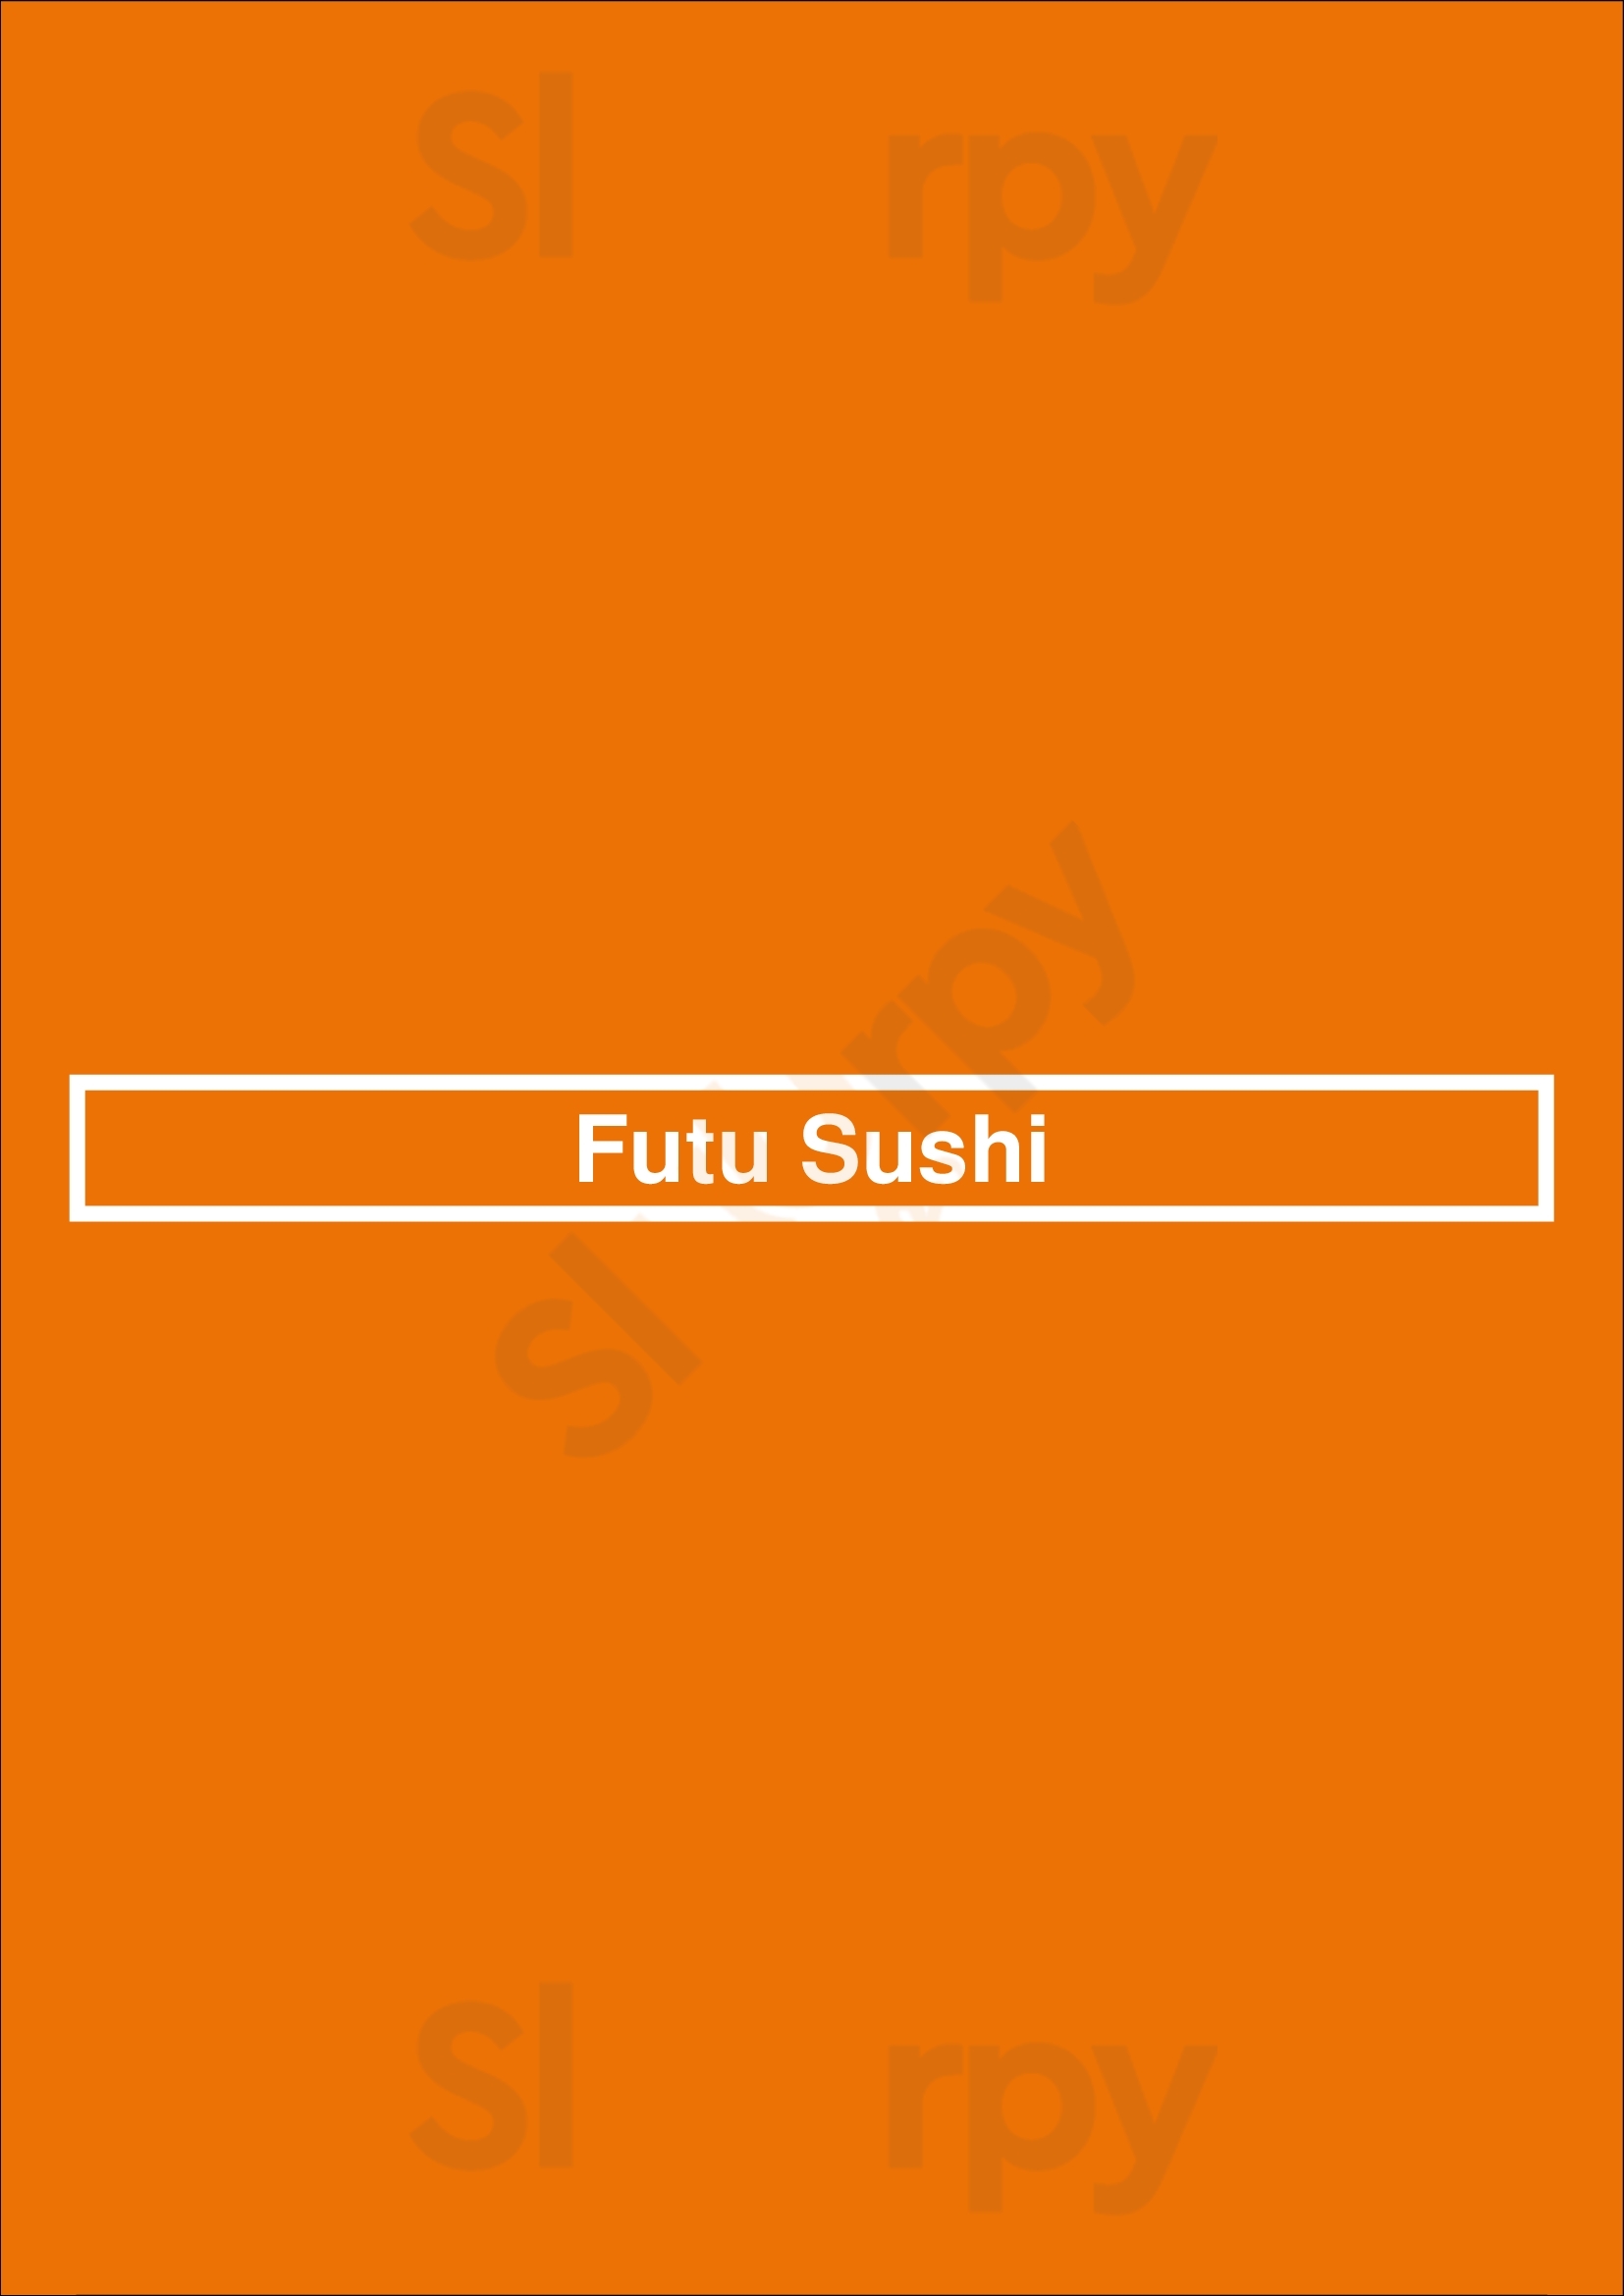 Futu Sushi Buenos Aires Menu - 1